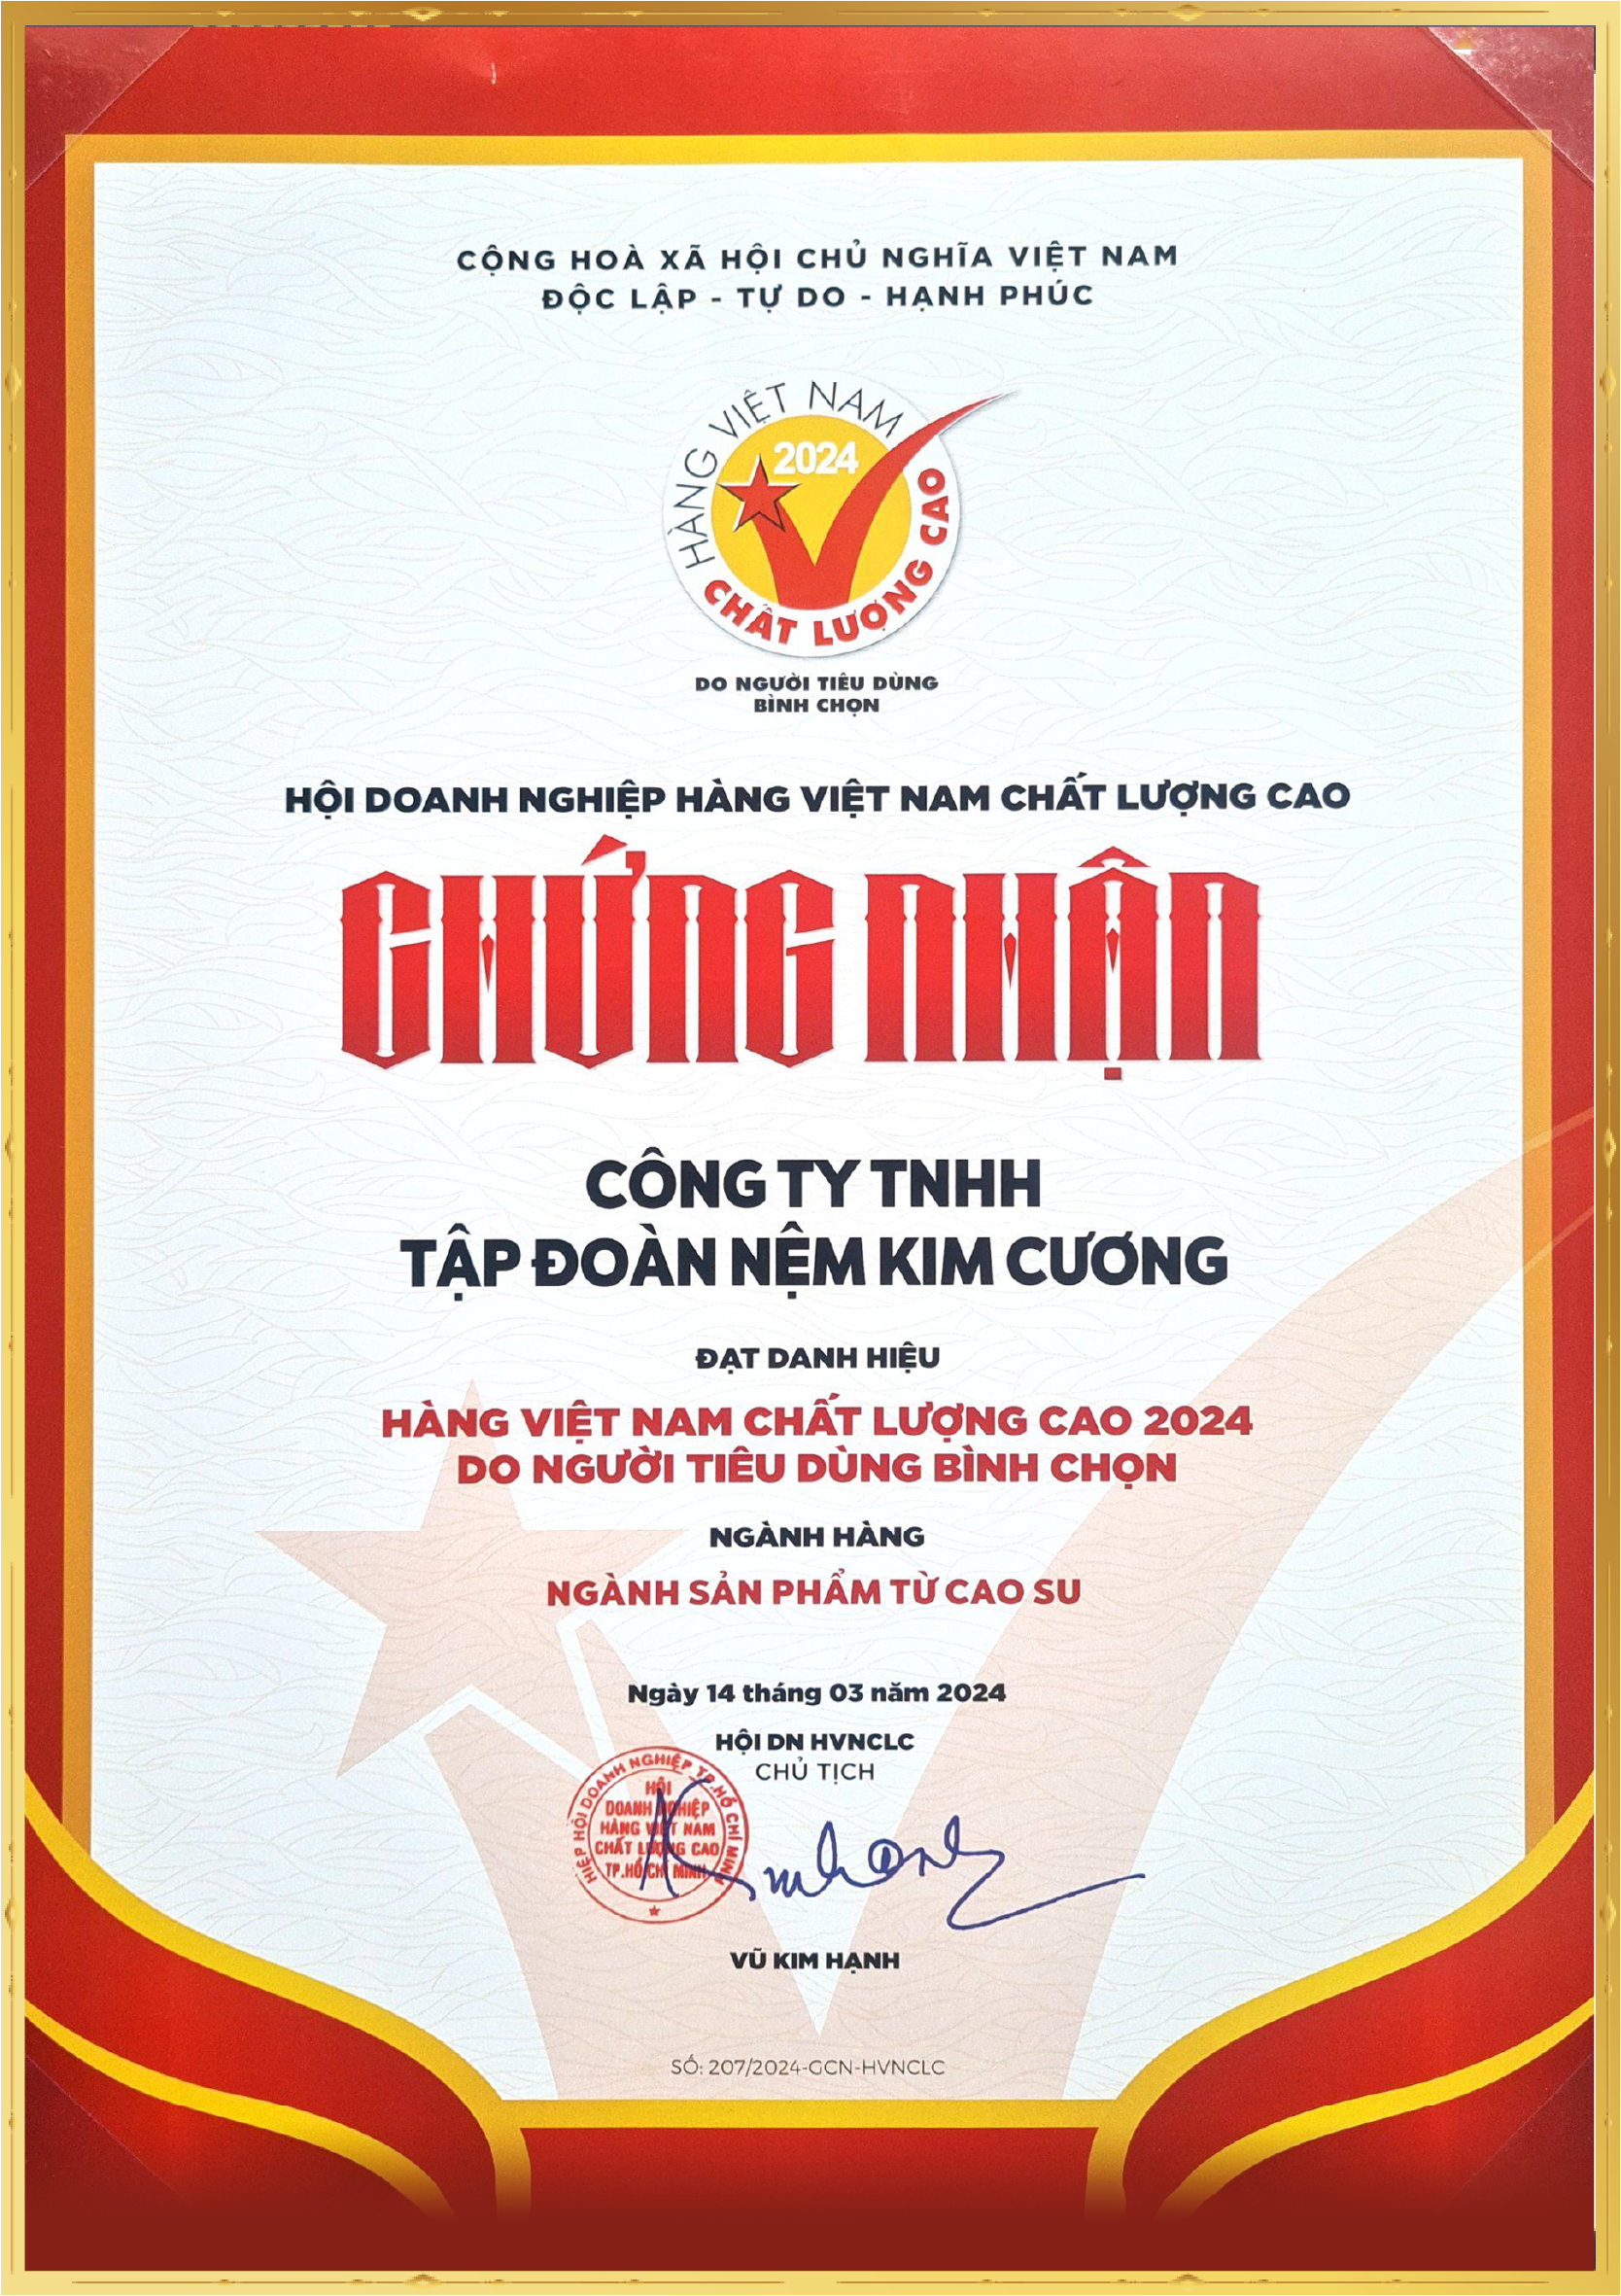 HVNCLC - Việt Nam